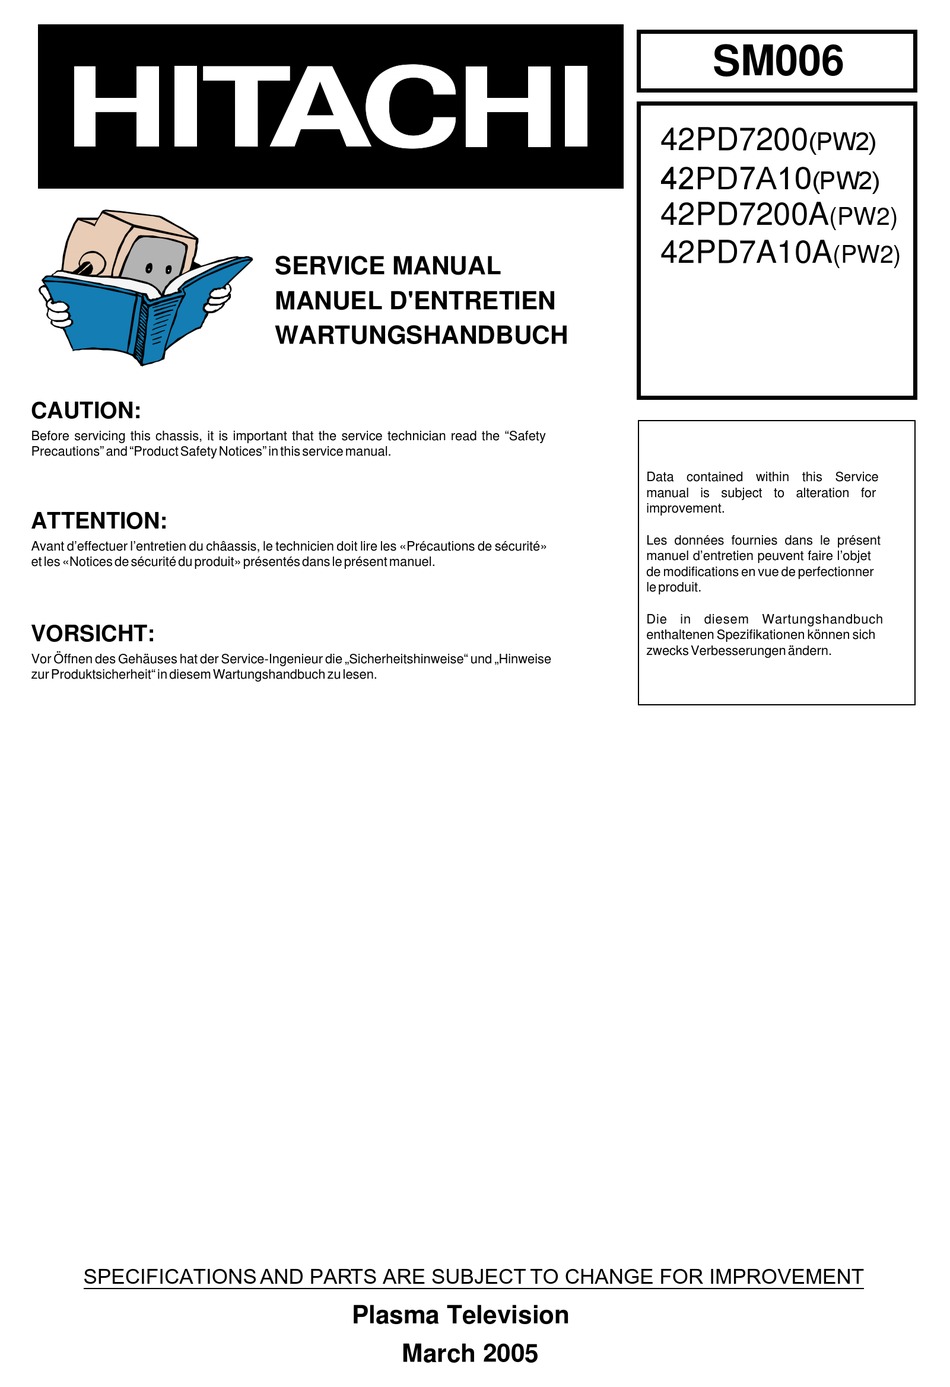 HITACHI 42PD7200 SERVICE MANUAL Pdf Download | ManualsLib